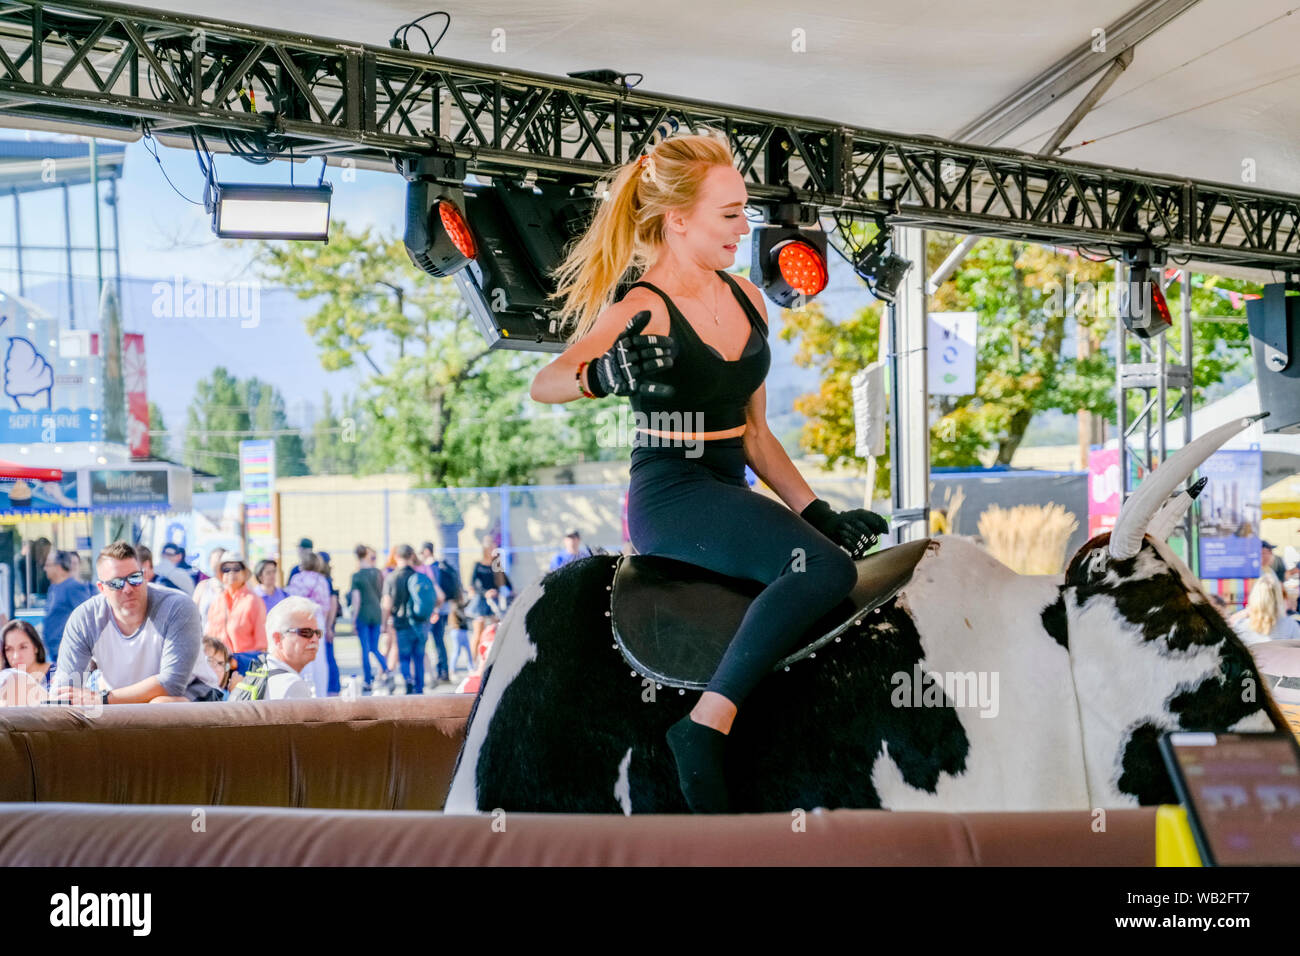 Women, riding, mechanical bull at carnival, midway, amusement park Stock Photo